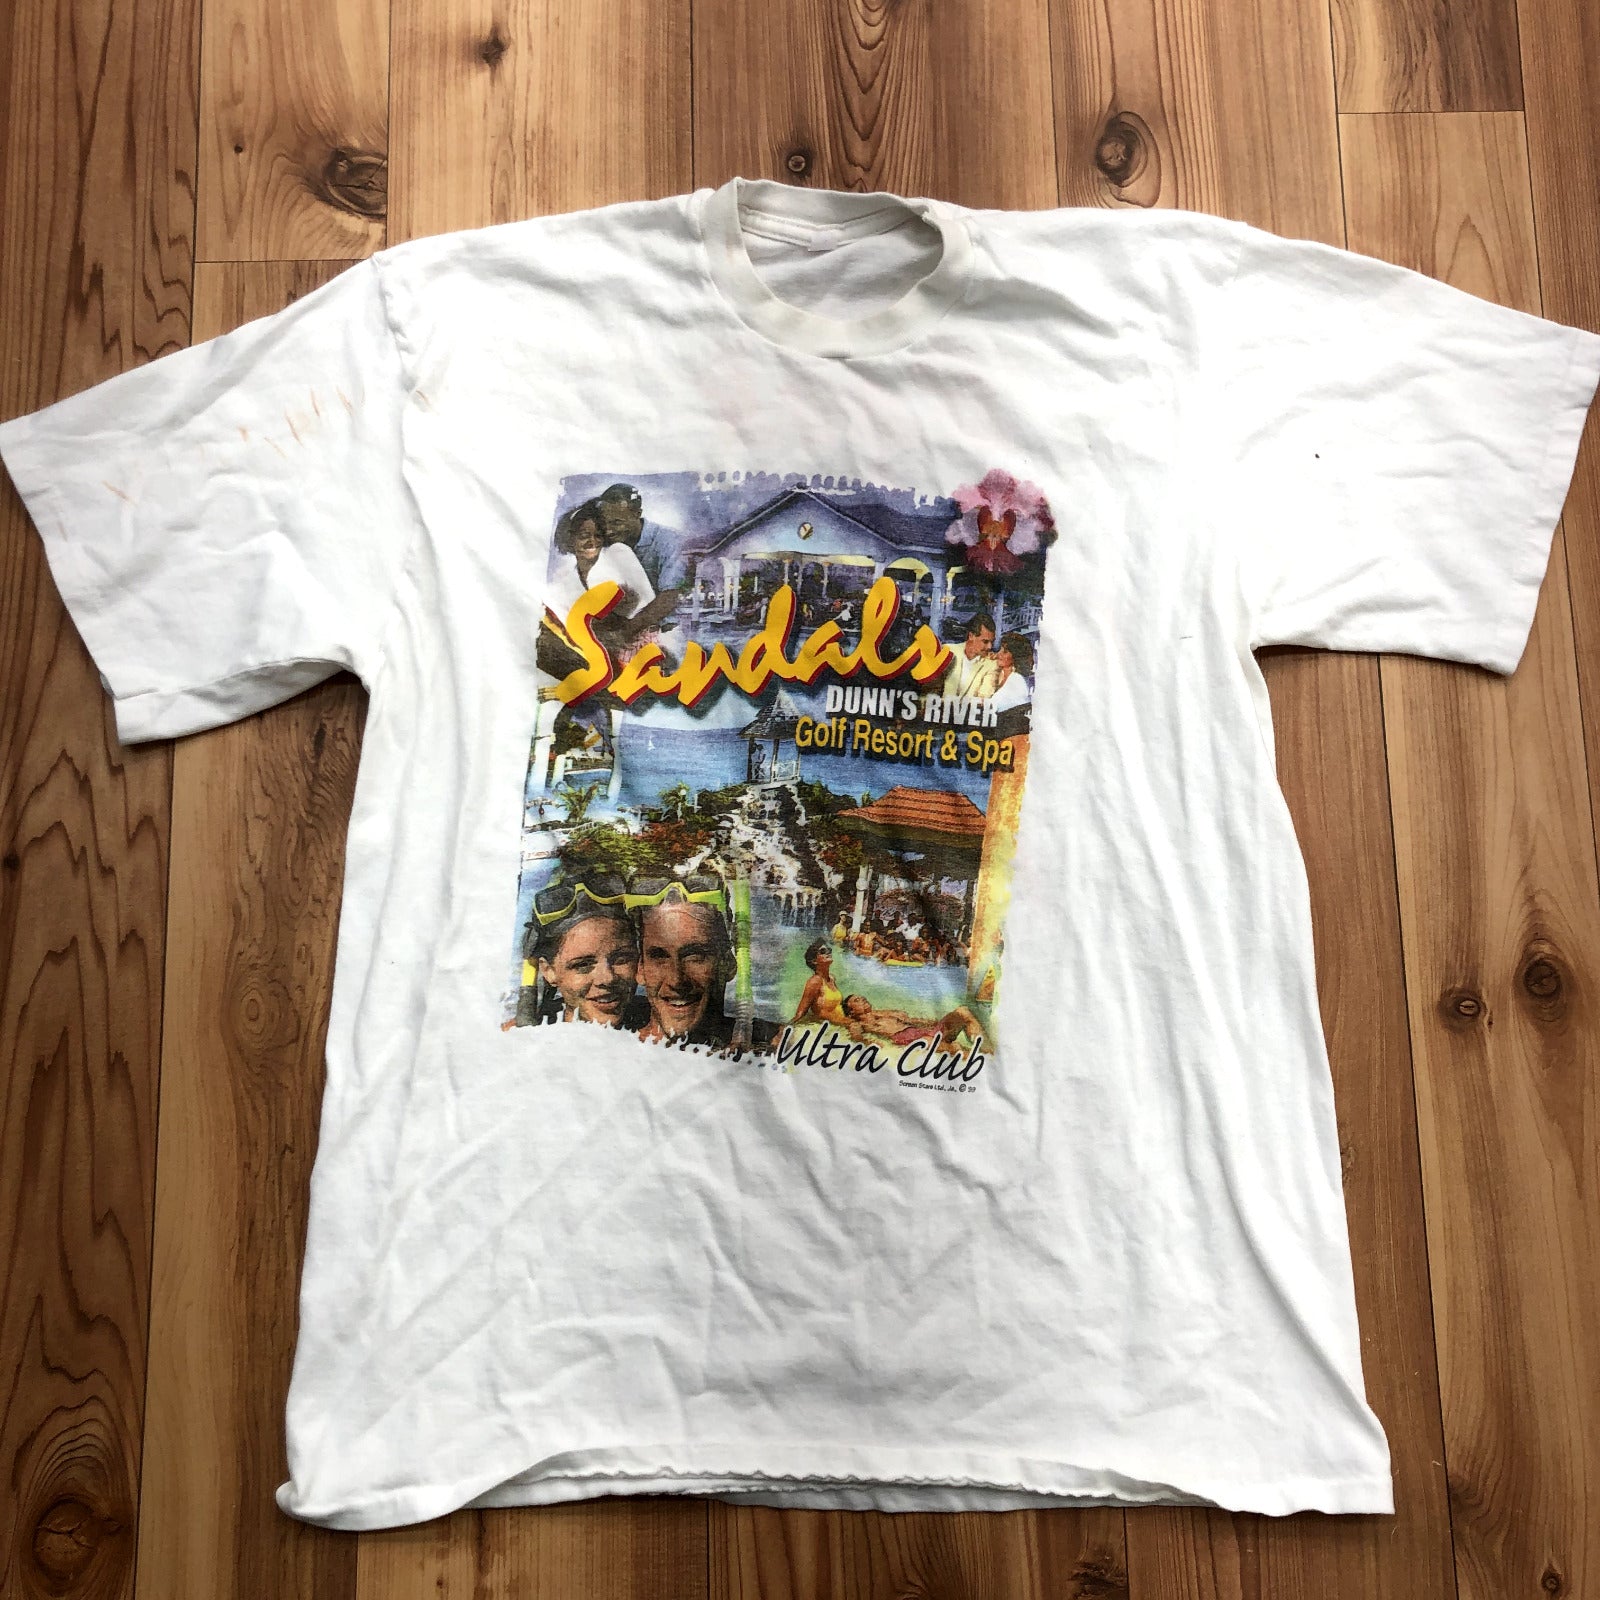 '99 Vintage Unbranded White Sandals Dunns River Golf Resort T-Shirt Adult Size S